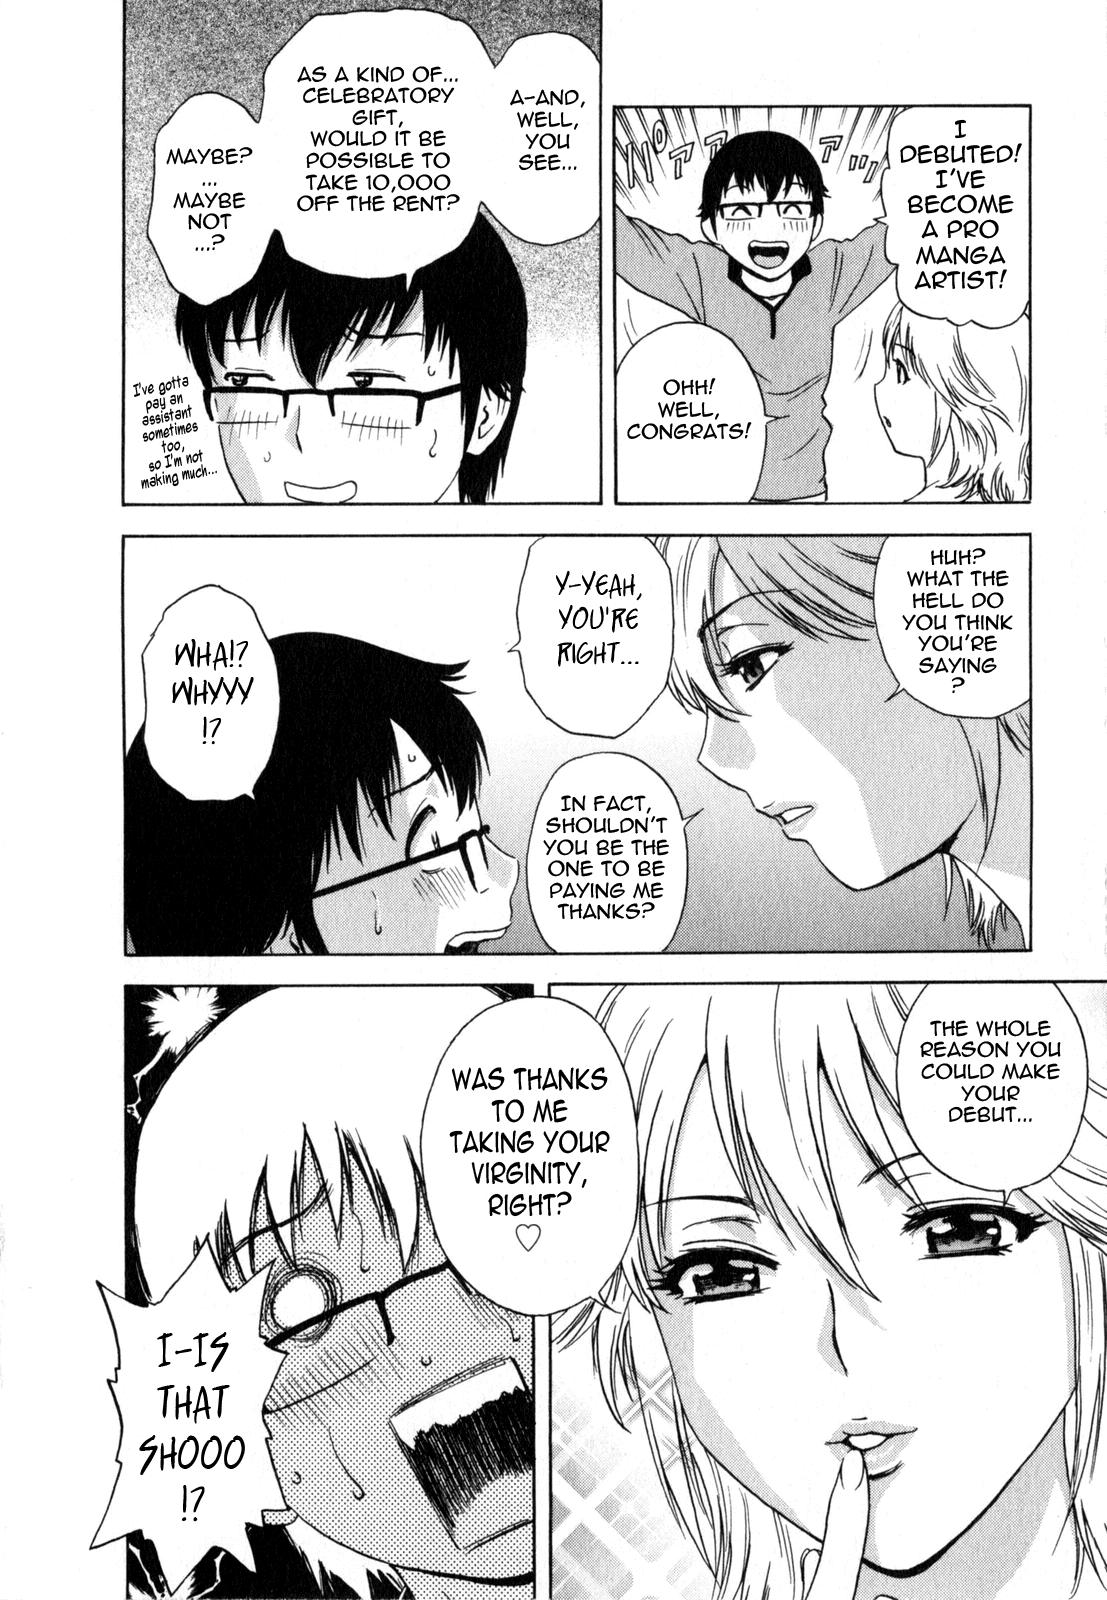 [Hidemaru] Life with Married Women Just Like a Manga 2 - Ch. 1-3 [English] {Tadanohito} 59